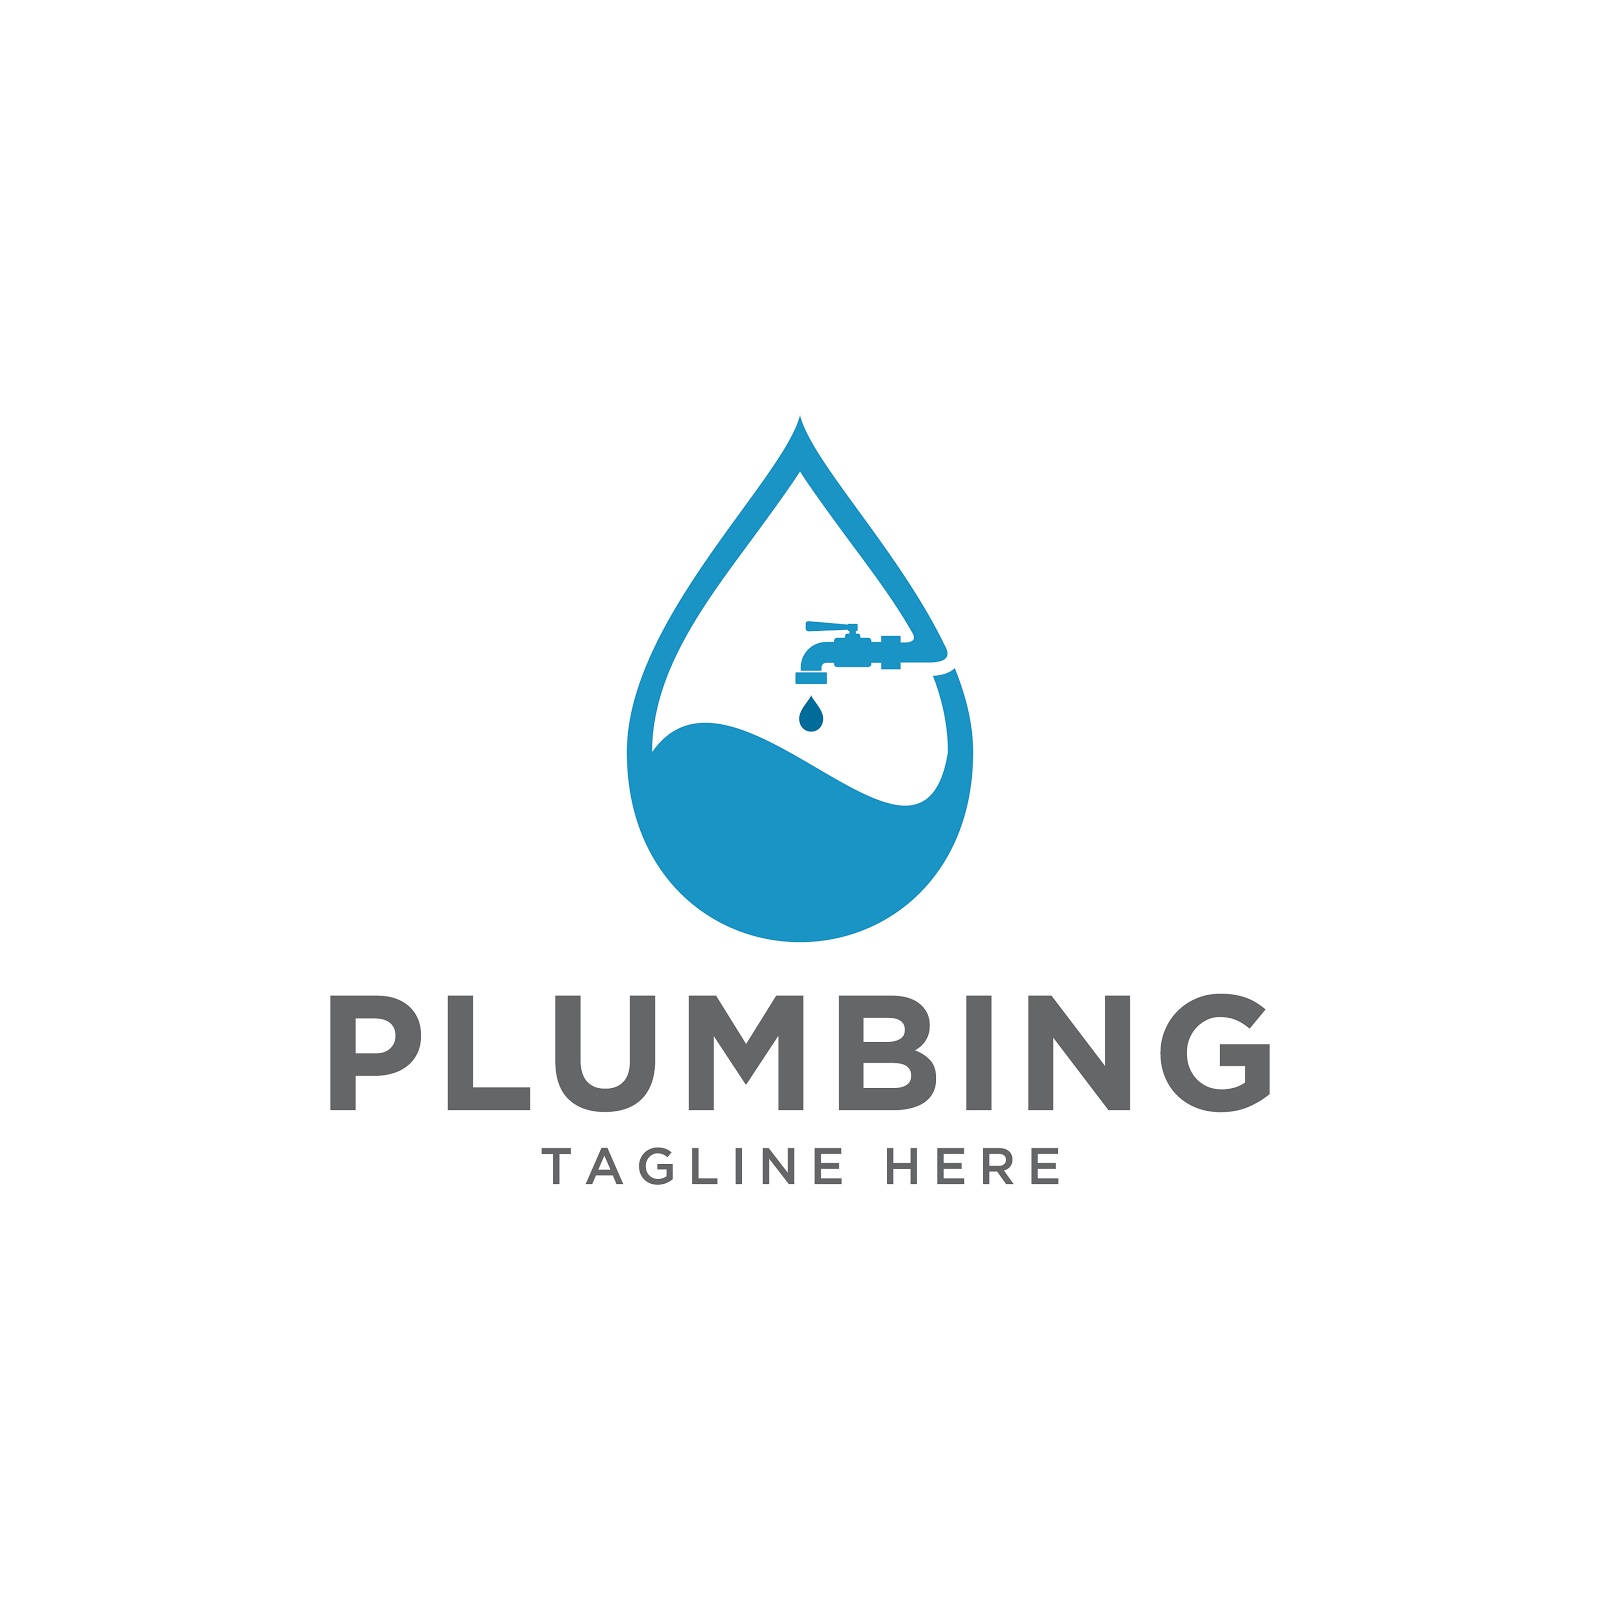 Plumbing water drop logo